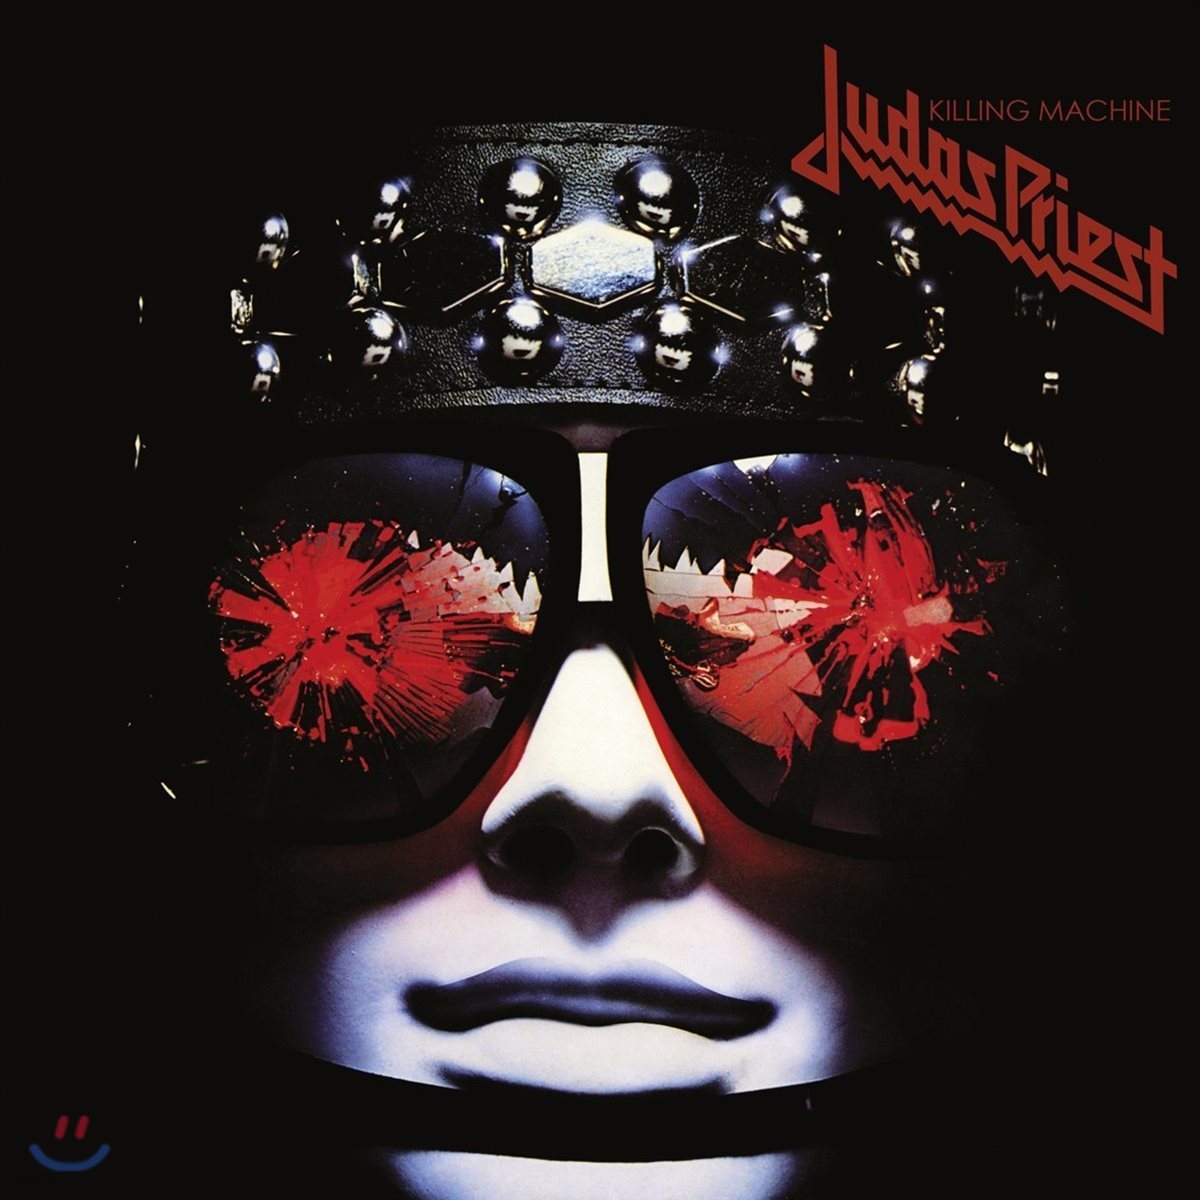 Judas Priest (주다스 프리스트) - Killing Machine [LP]